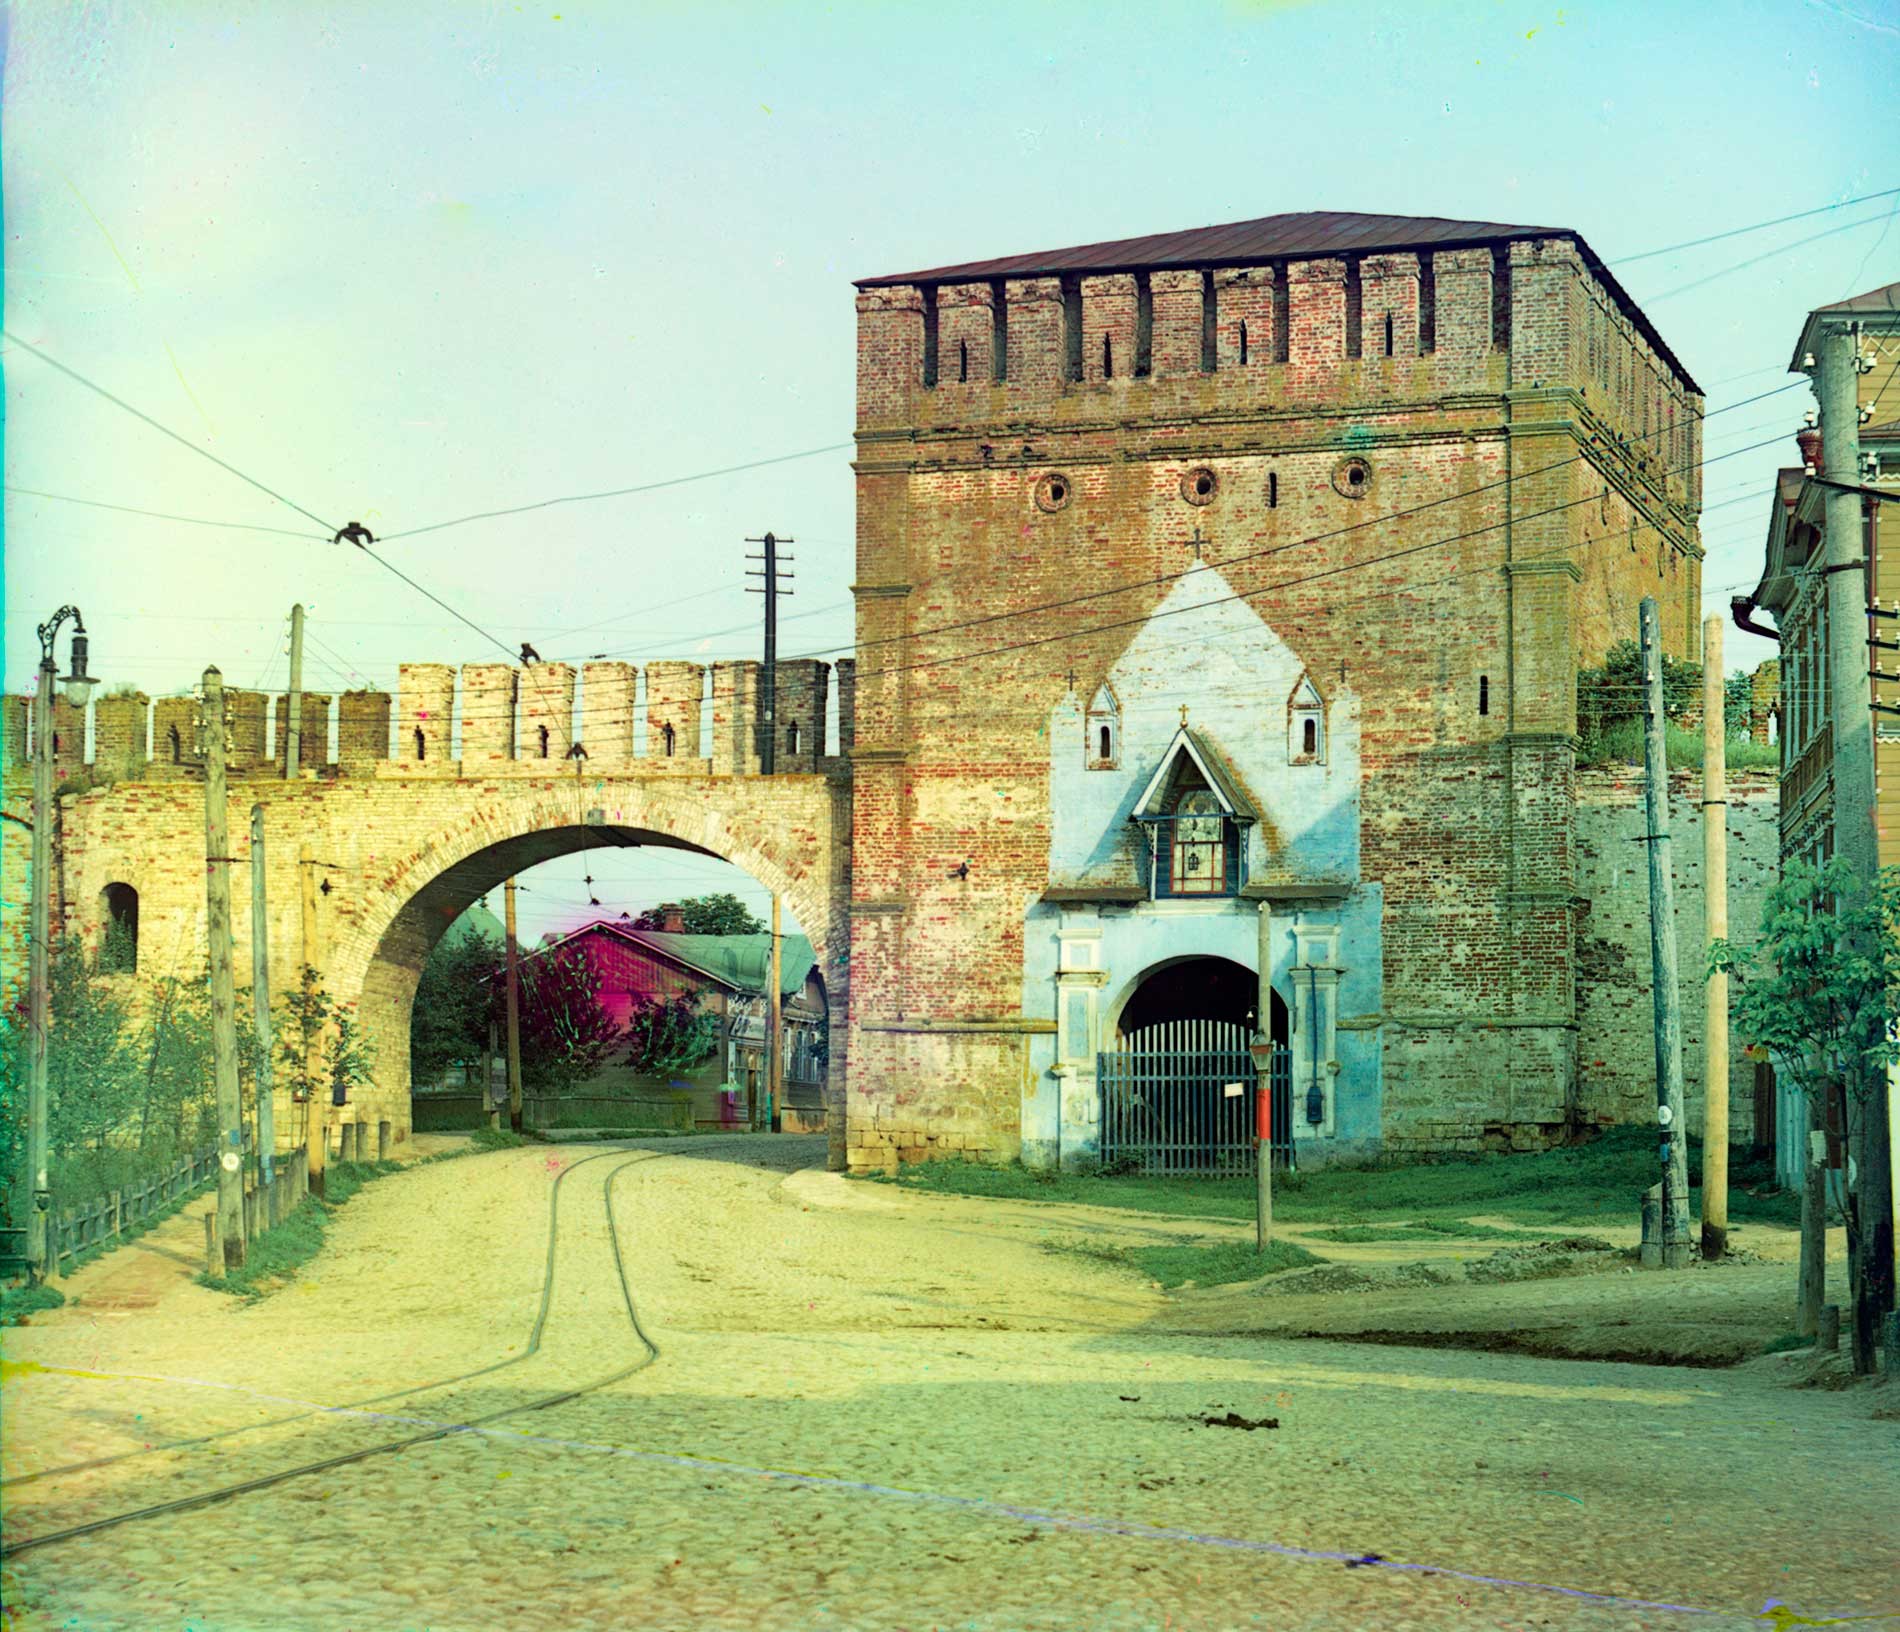 Smolensk citadel. St Nicholas Gate and Tower, with tram line. Summer 1912